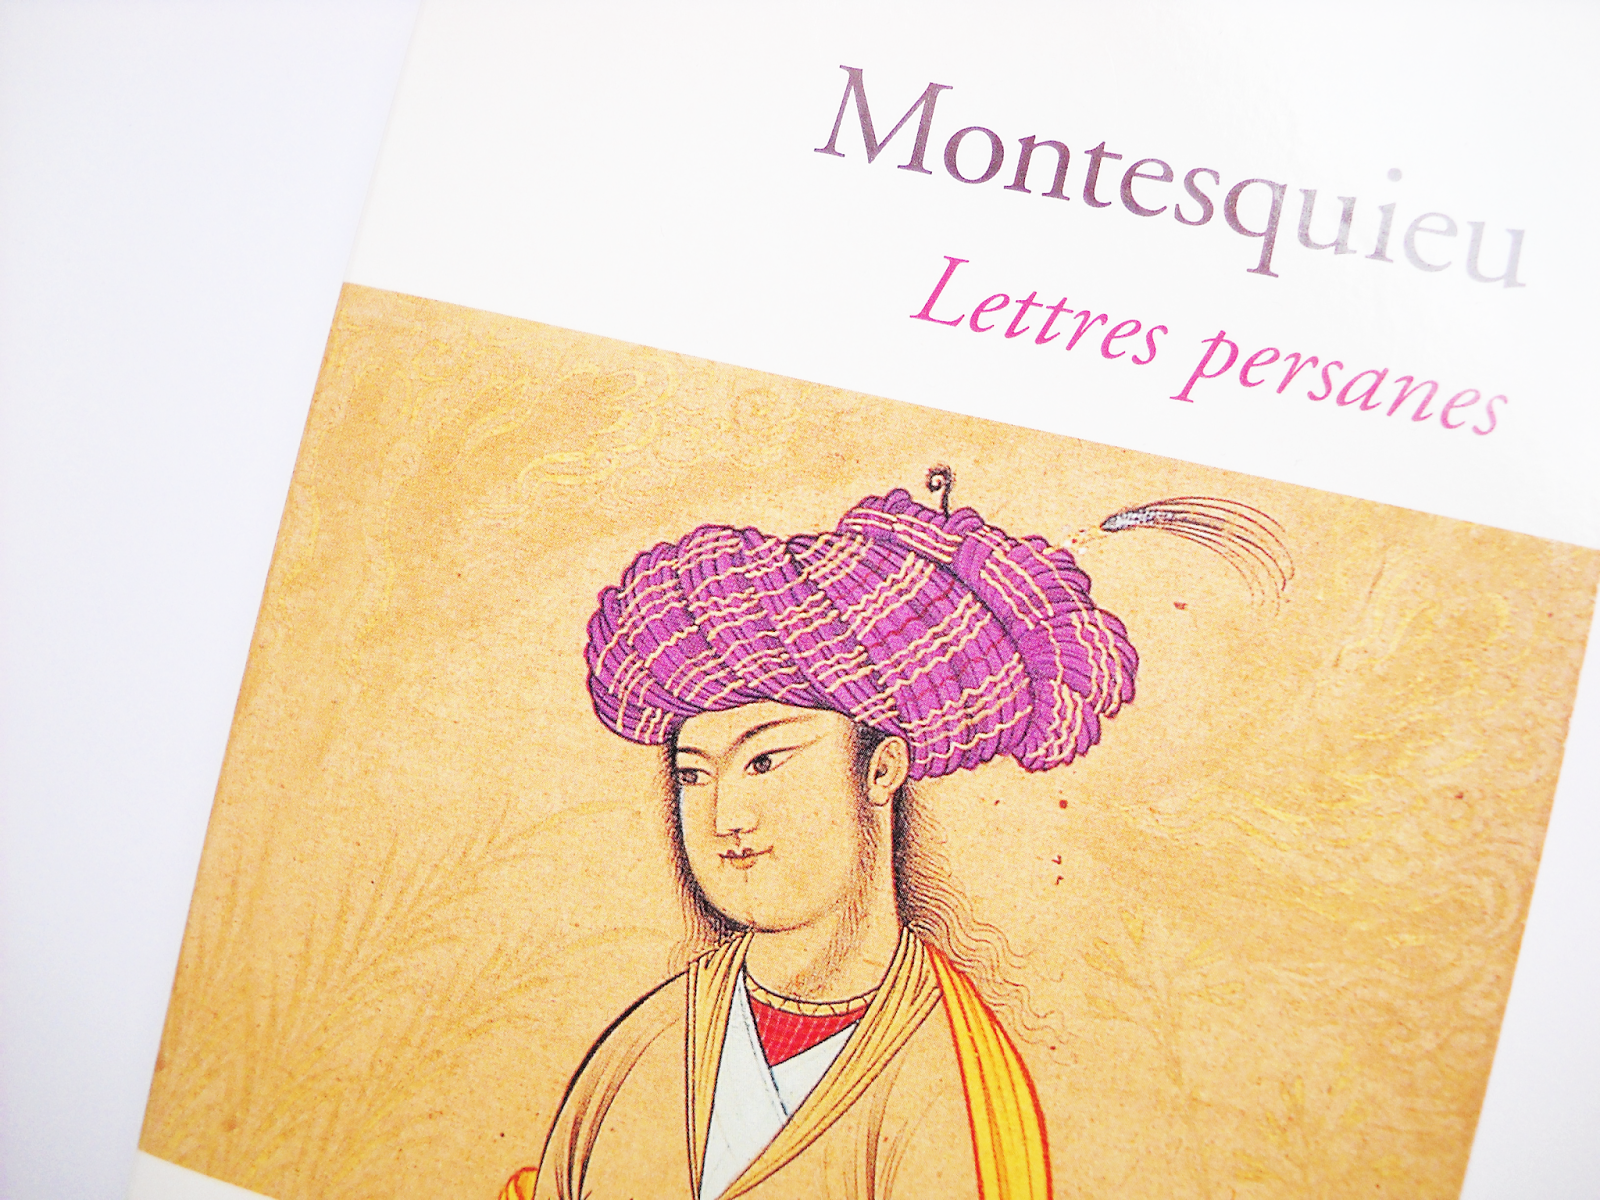 Lettres persanes, Montesquieu